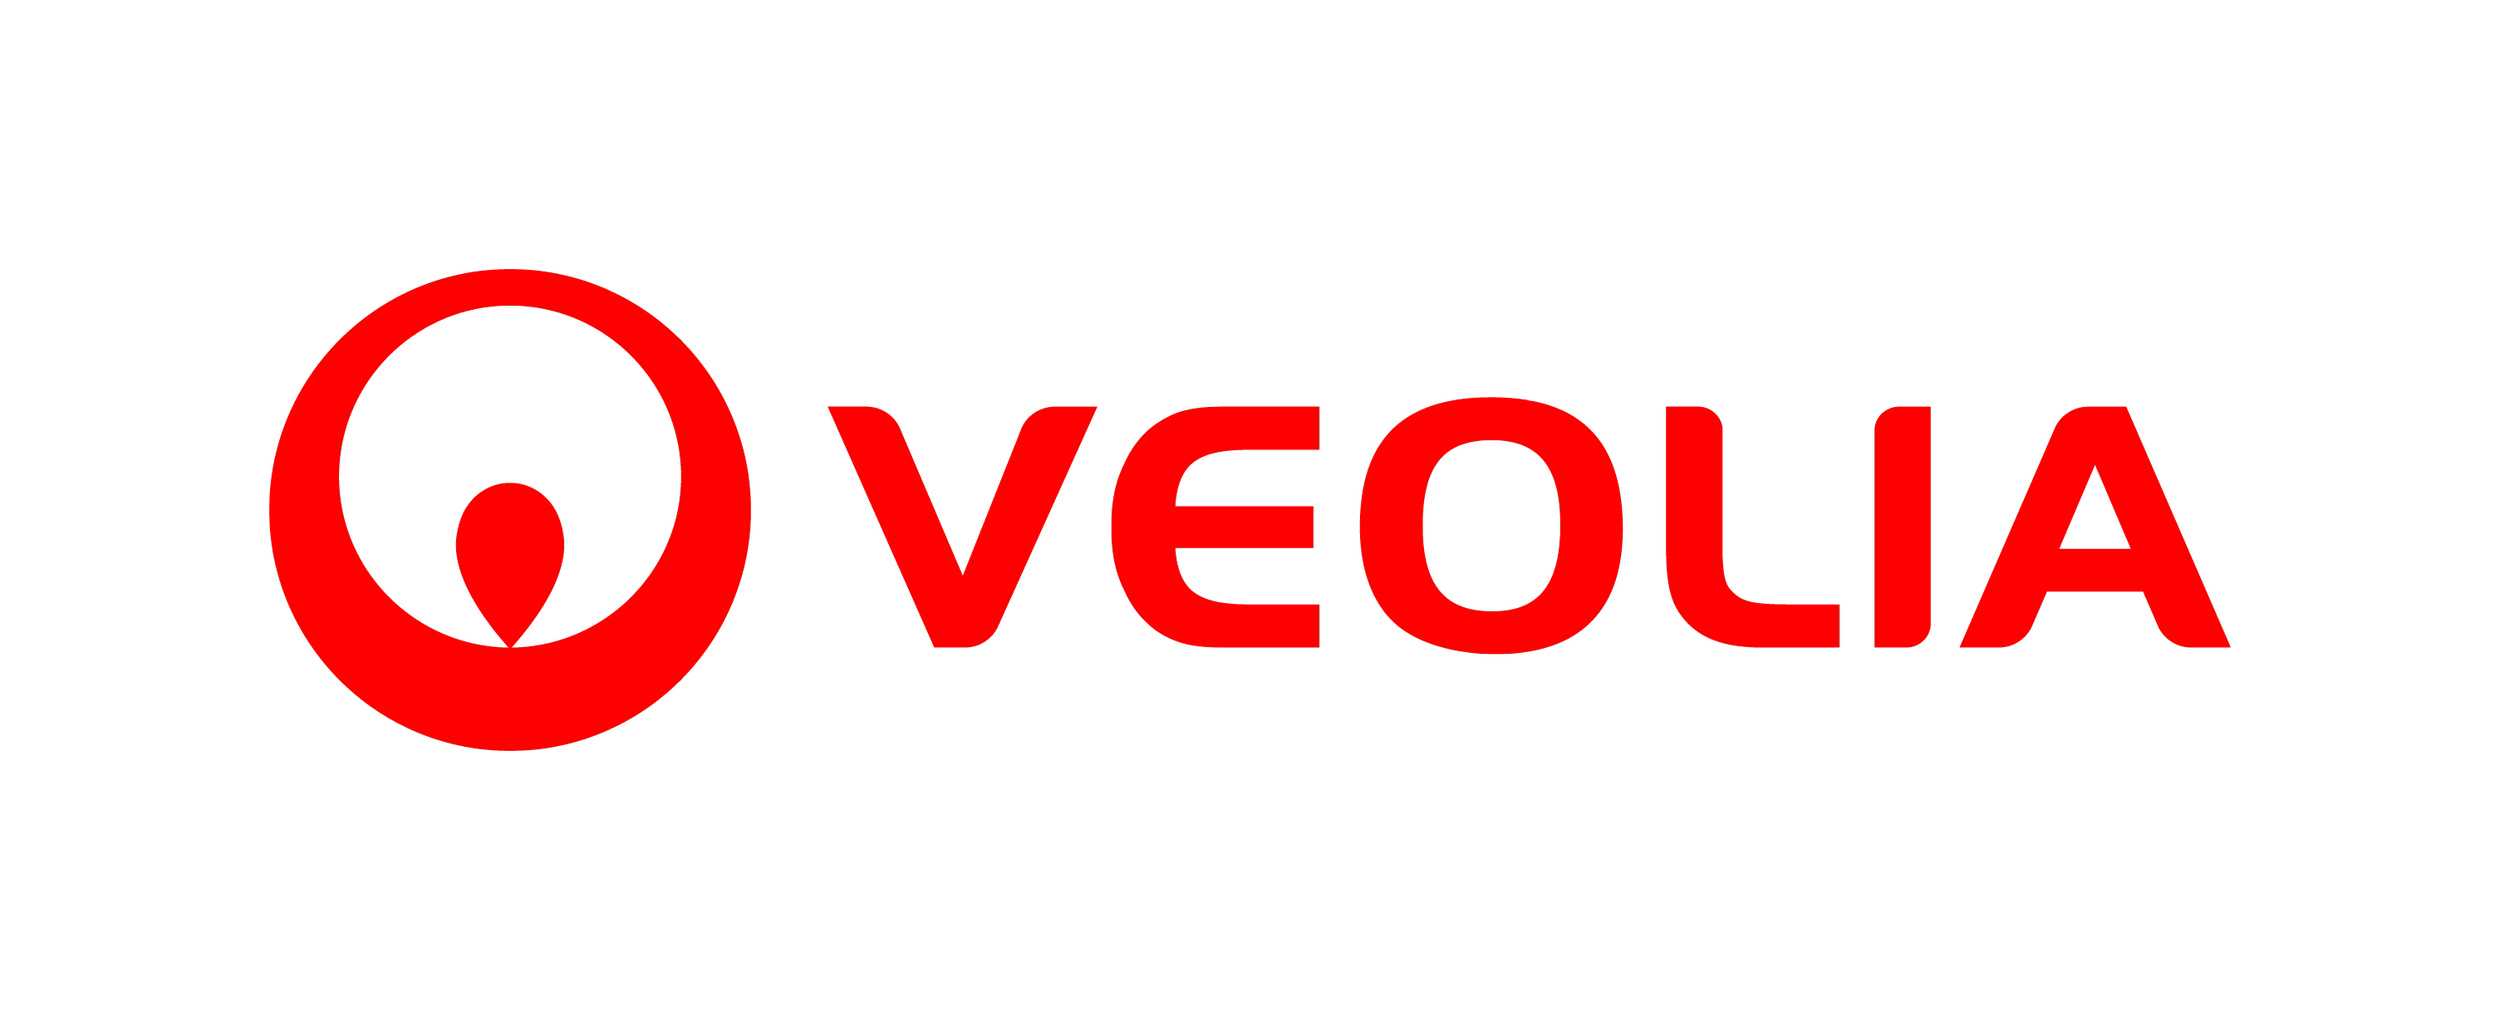 veolia-logo-clear.png